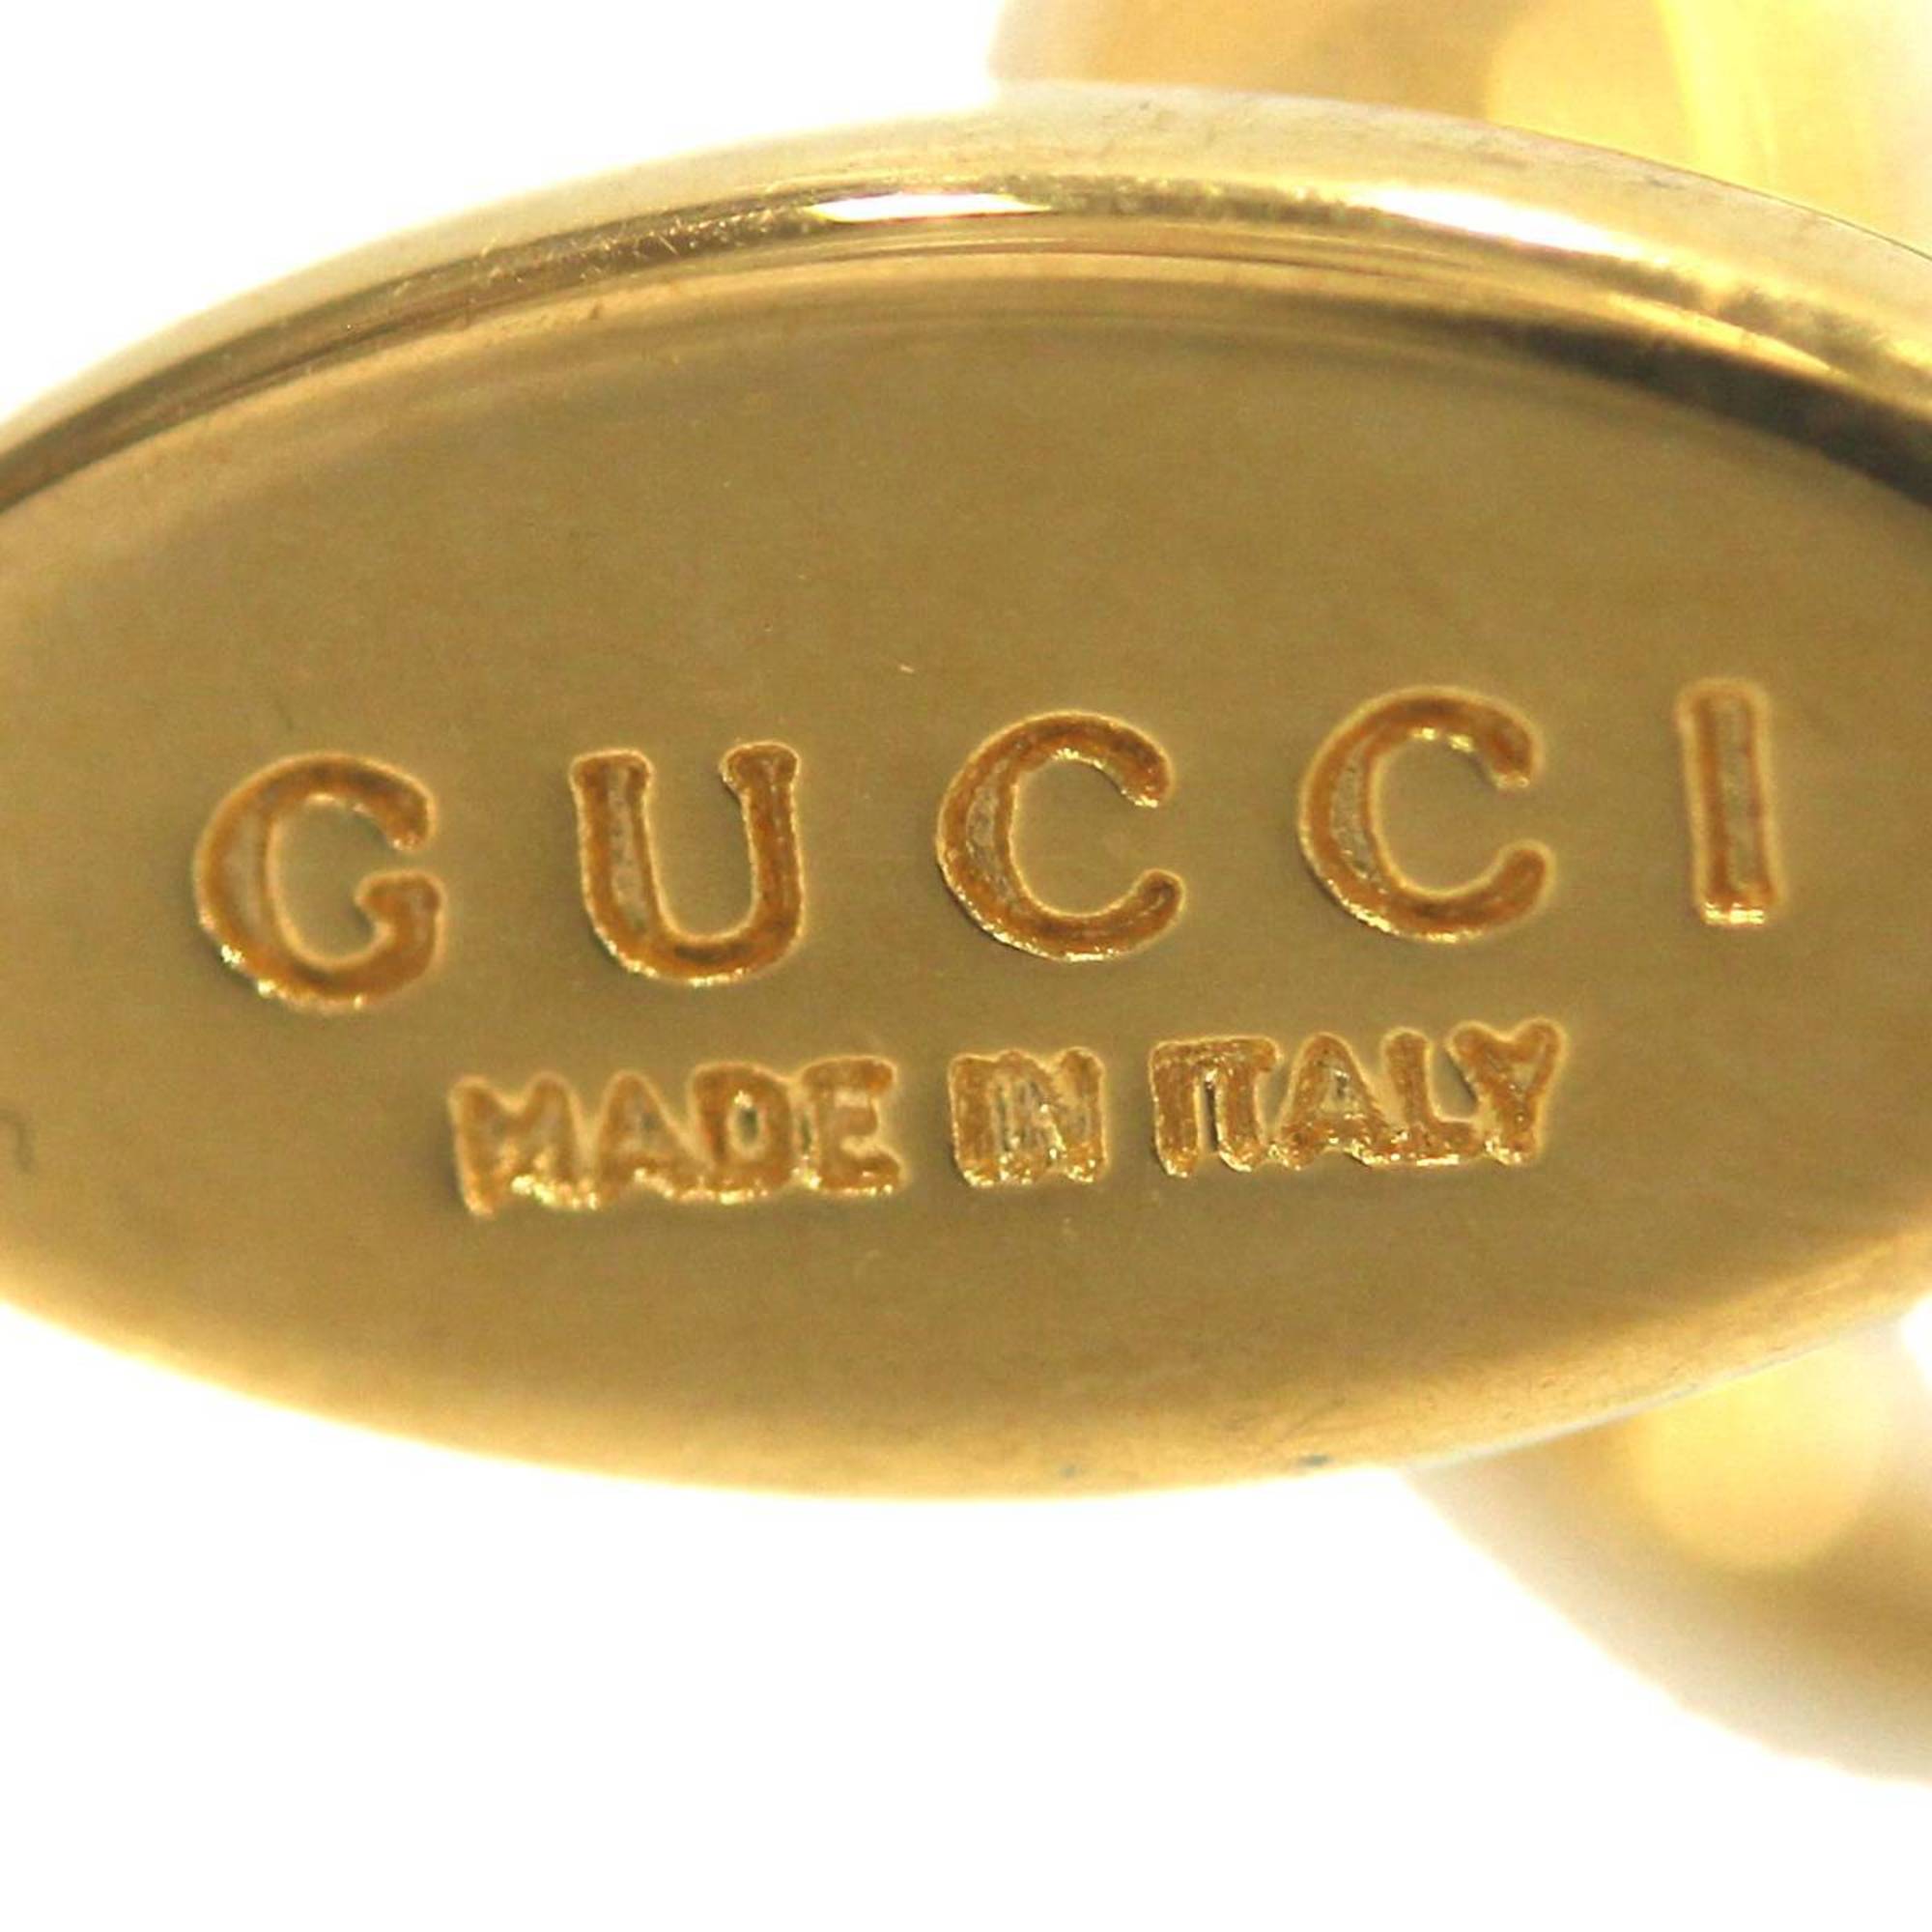 GUCCI Horsebit Cufflinks Gold 2×1.6cm